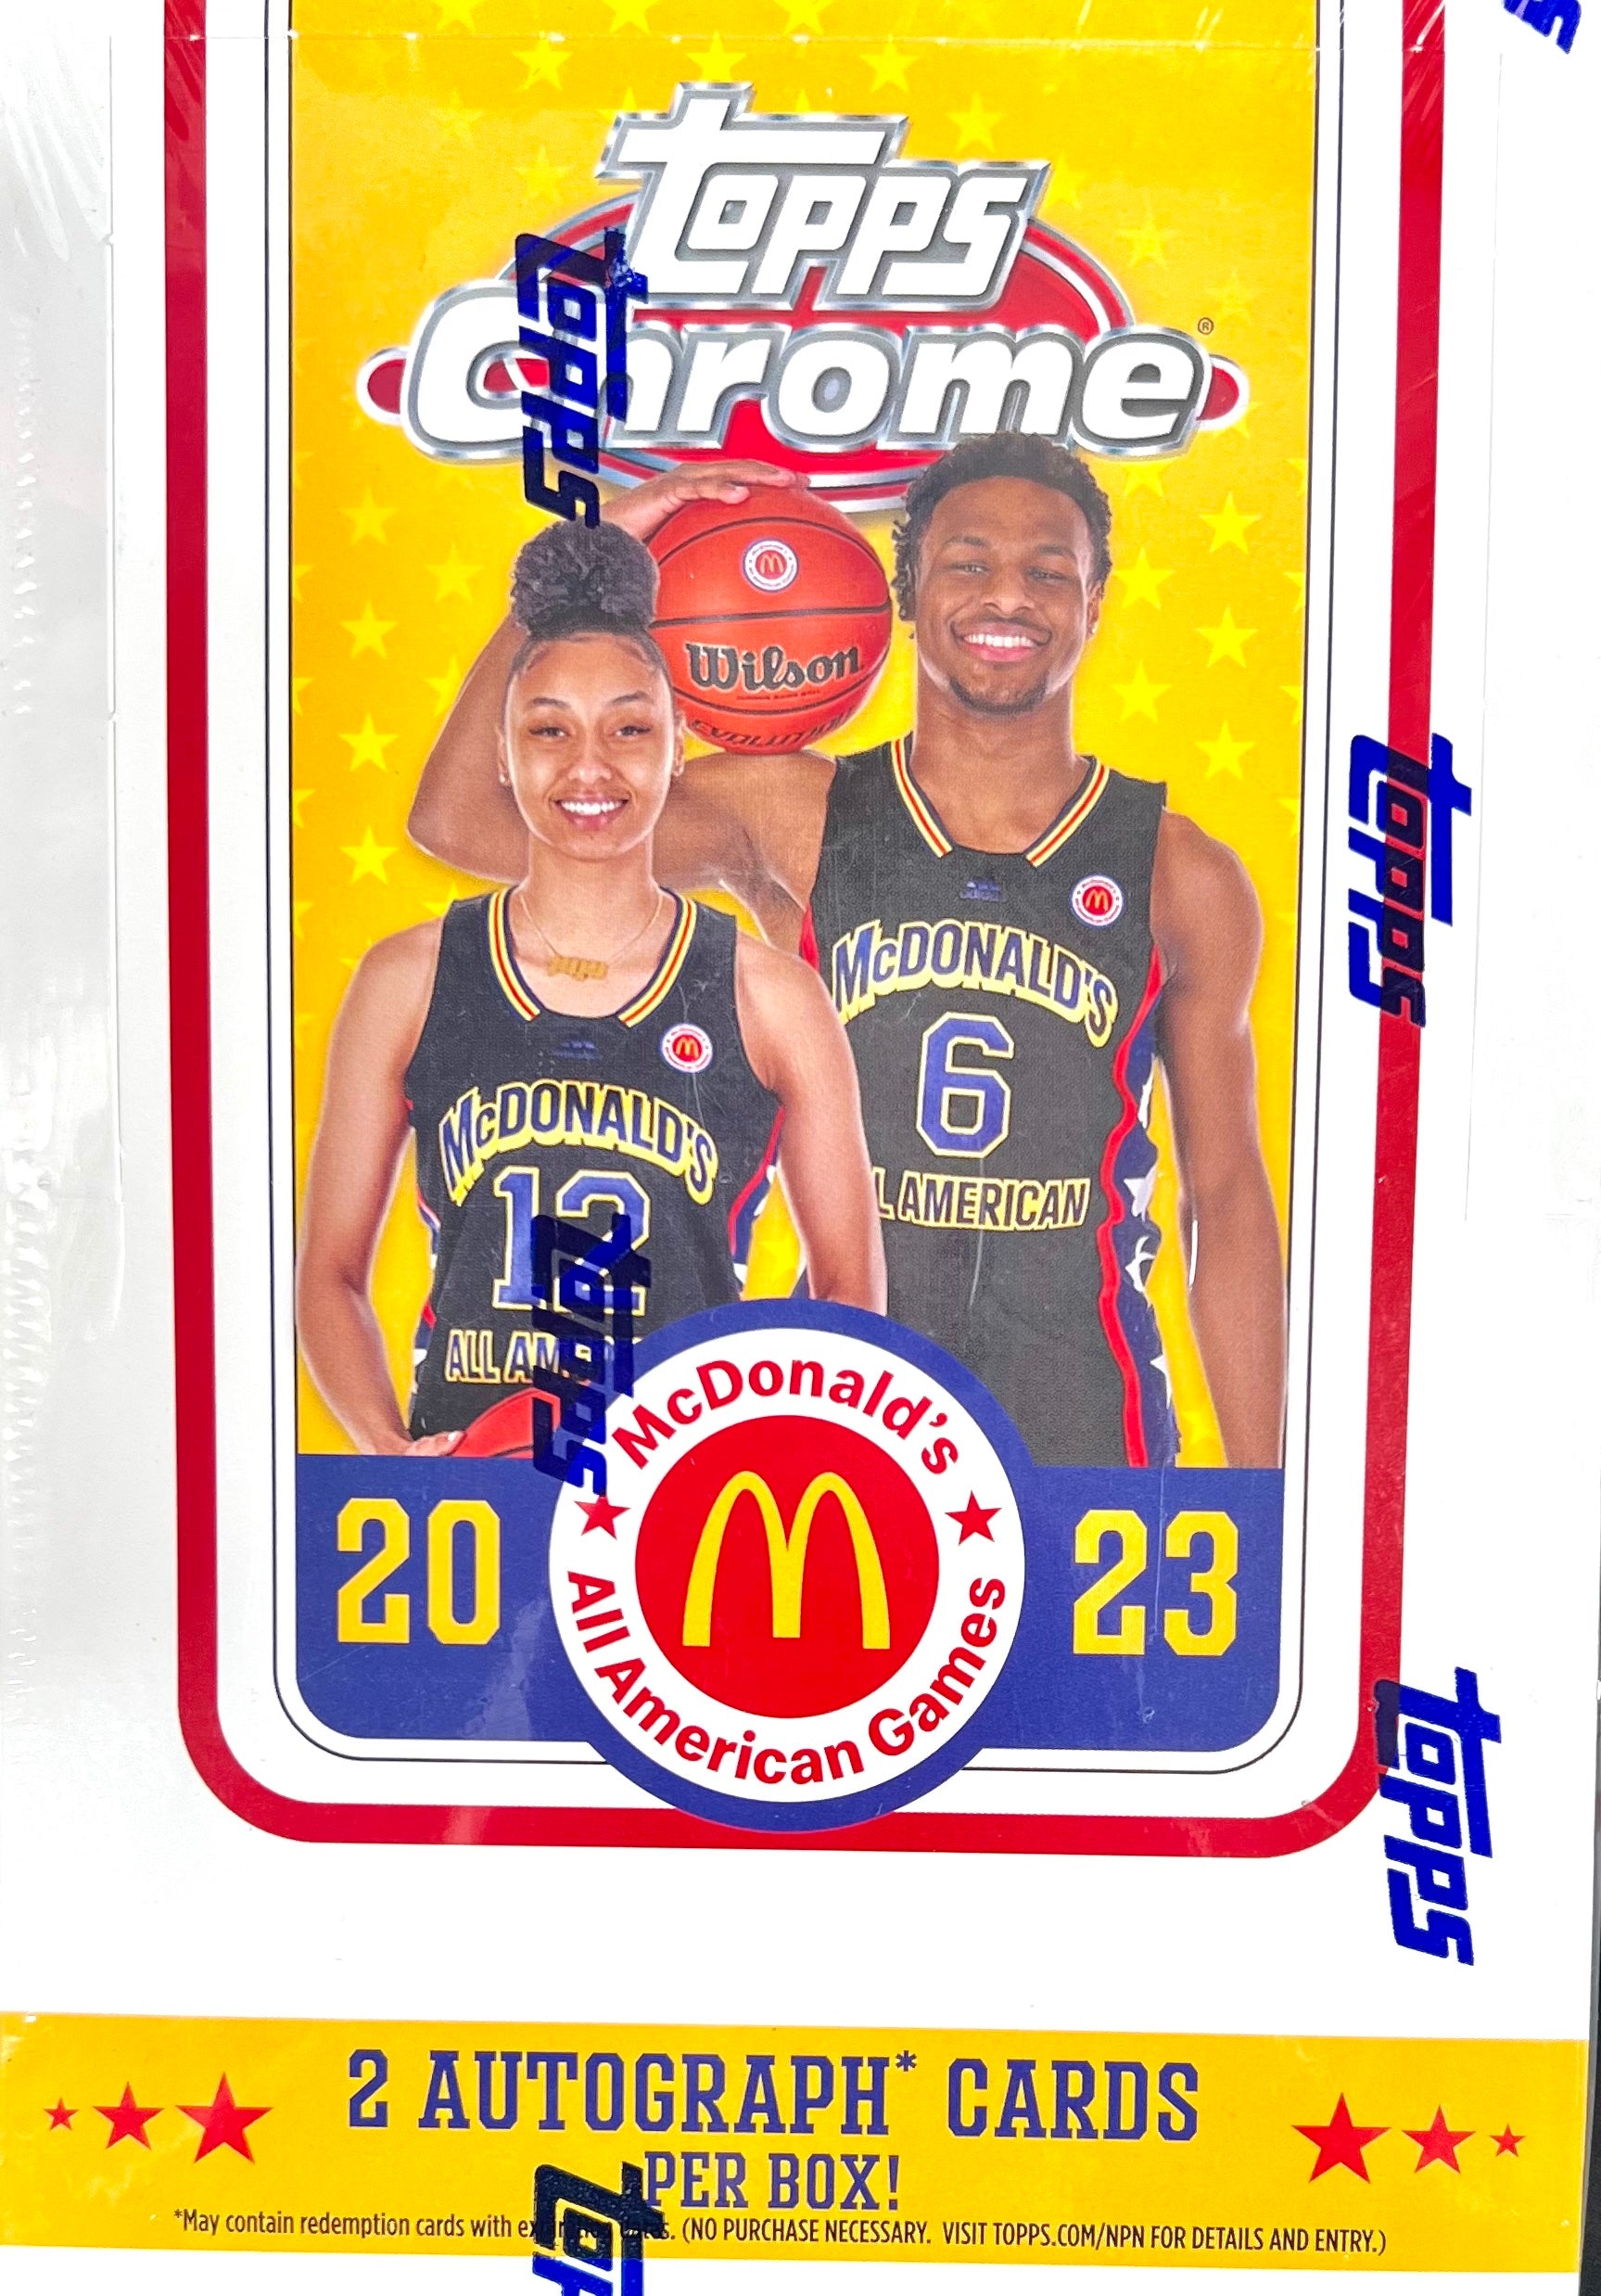 McDonald's All American Games, Marketing